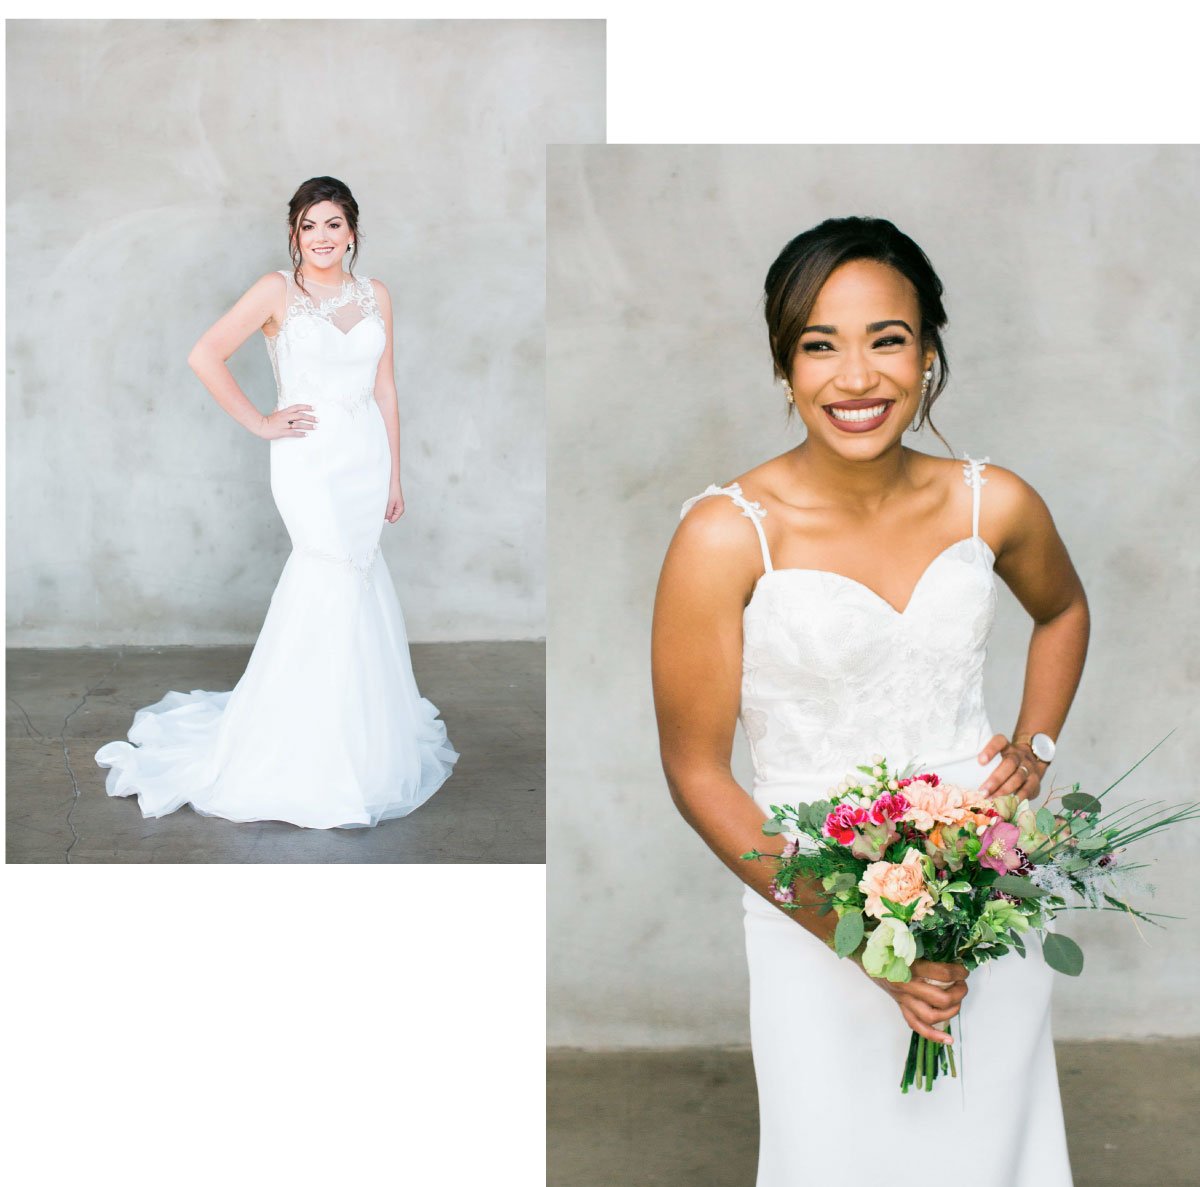 Bridal Boutique & Wedding Dress Shop Greenville, SC